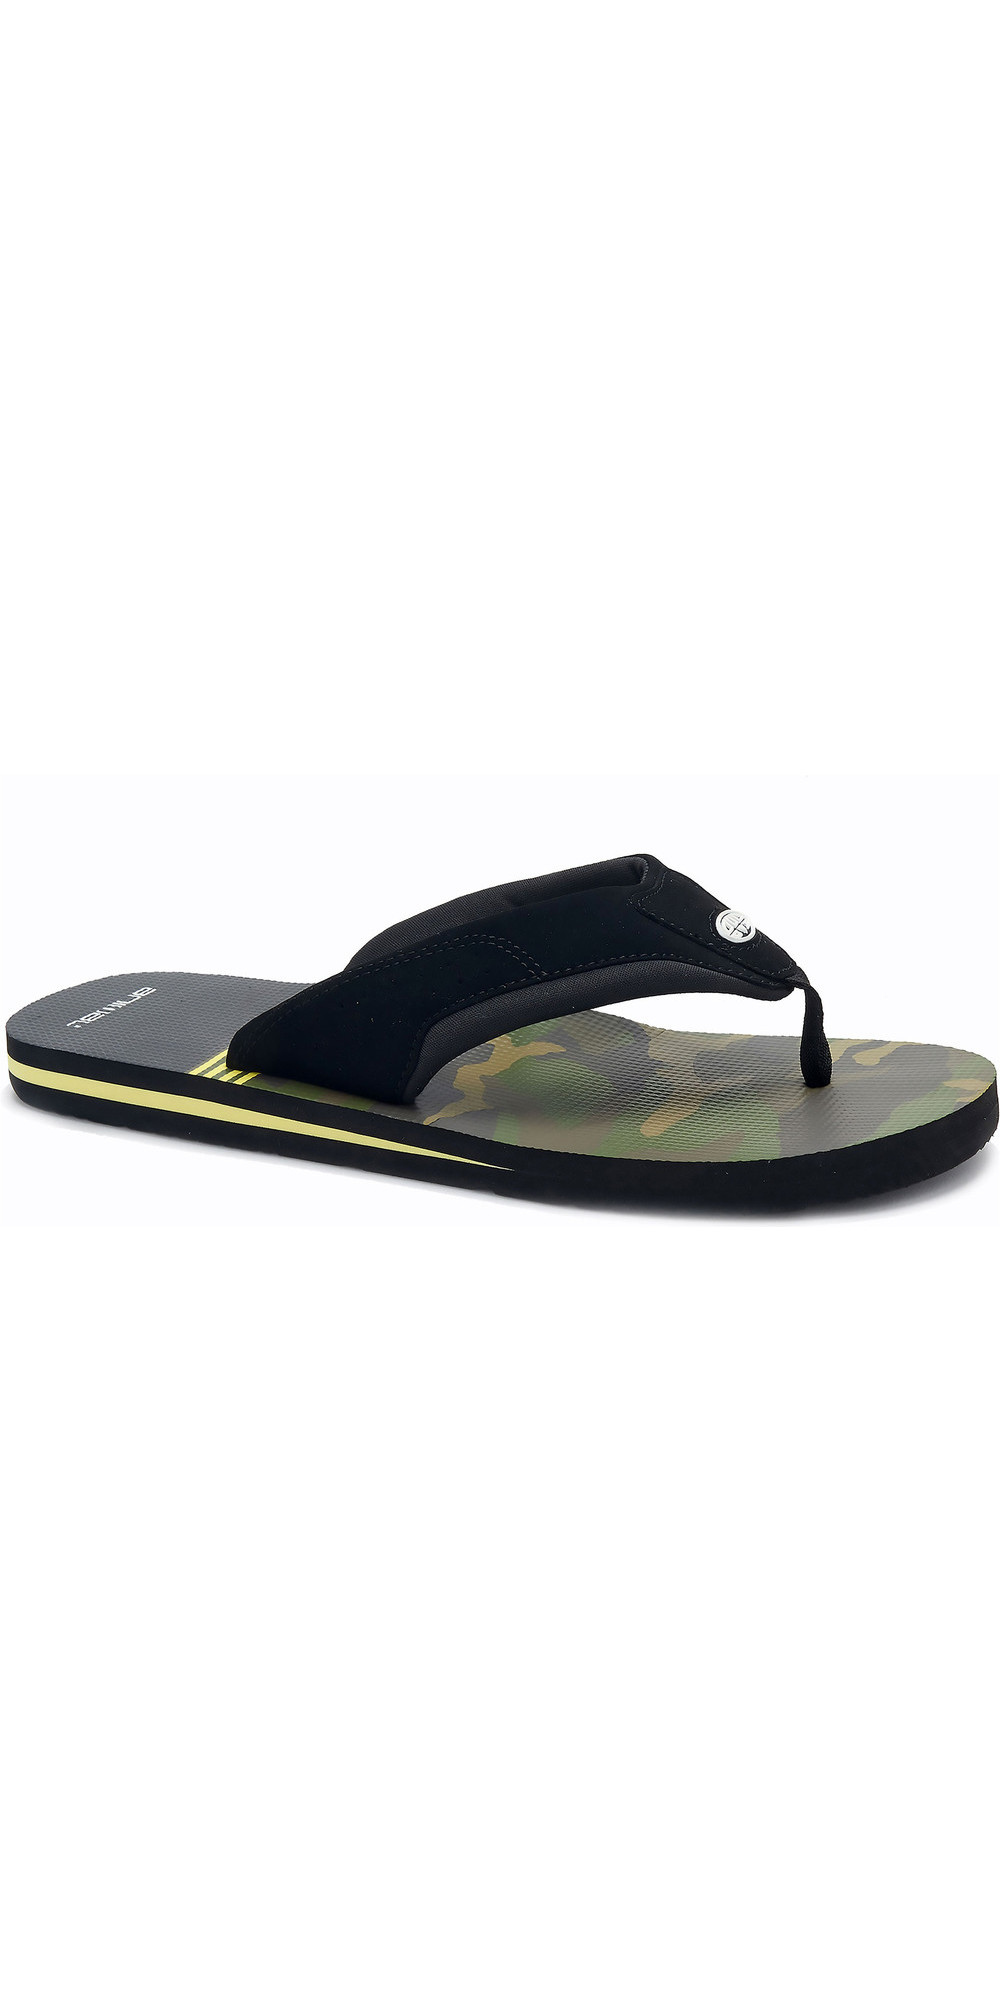 2020 Animal Mens Slyde Slider Sandals FM0SS008 - Black - Accessories -  Footwear | Wetsuit Outlet